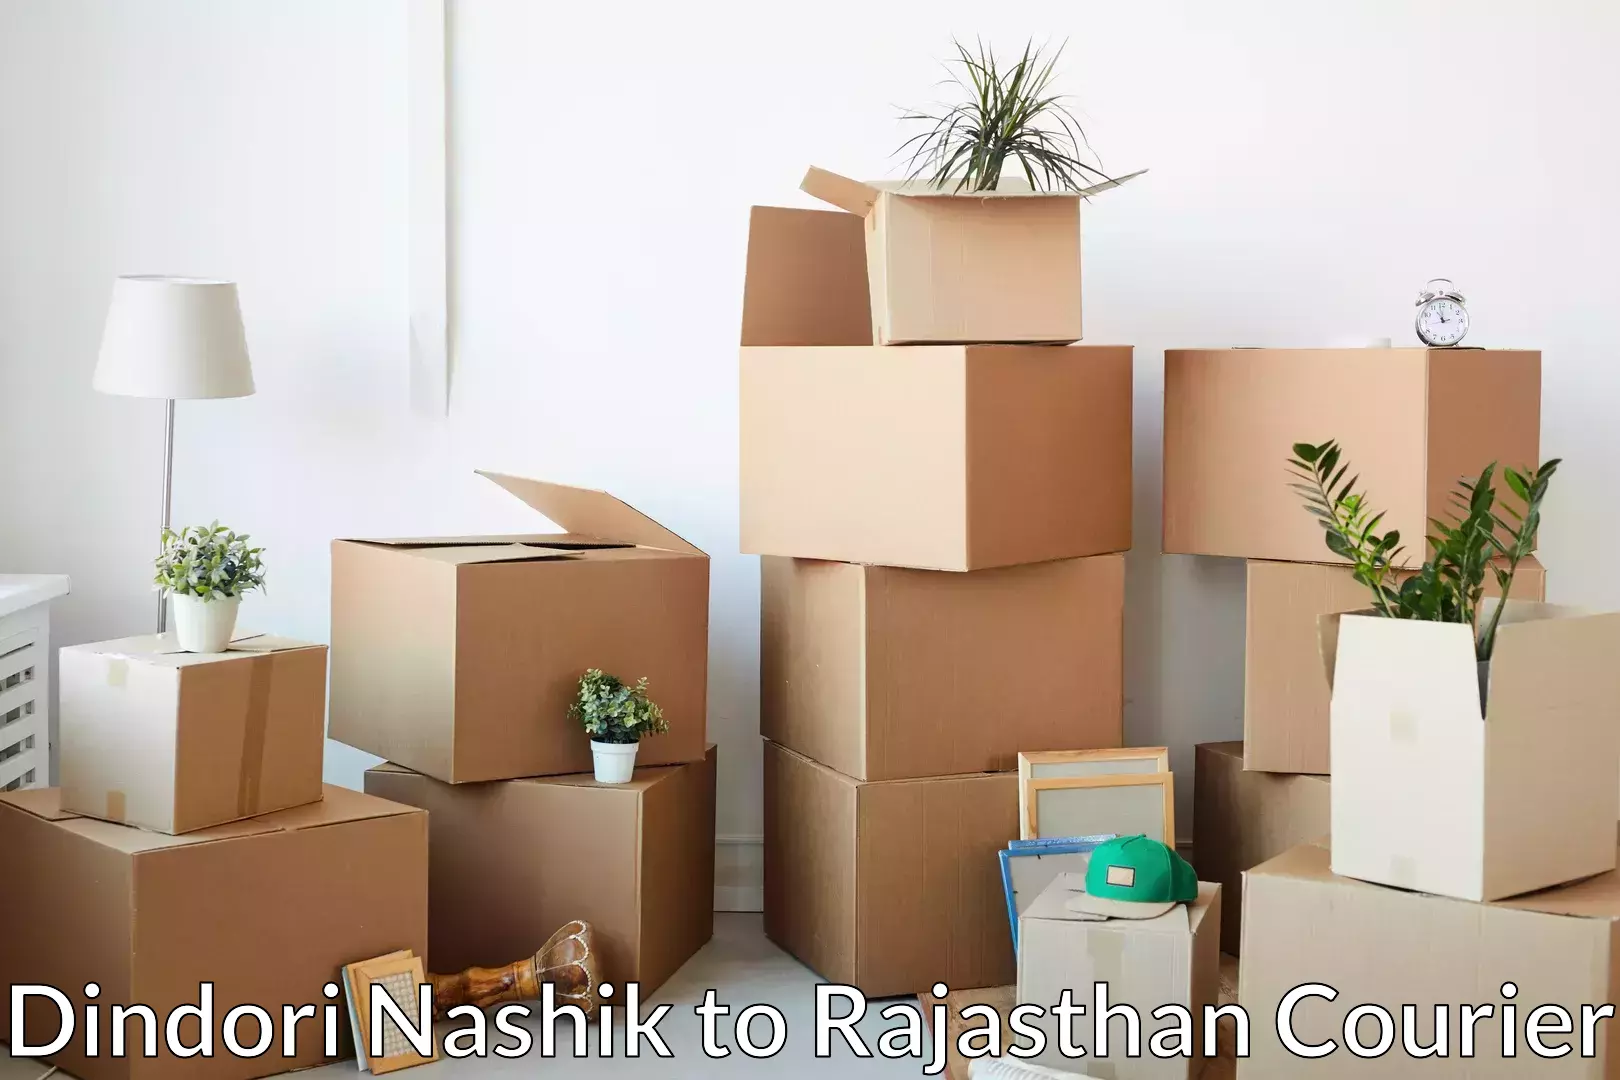 Home goods moving company Dindori Nashik to Sri Vijaynagar